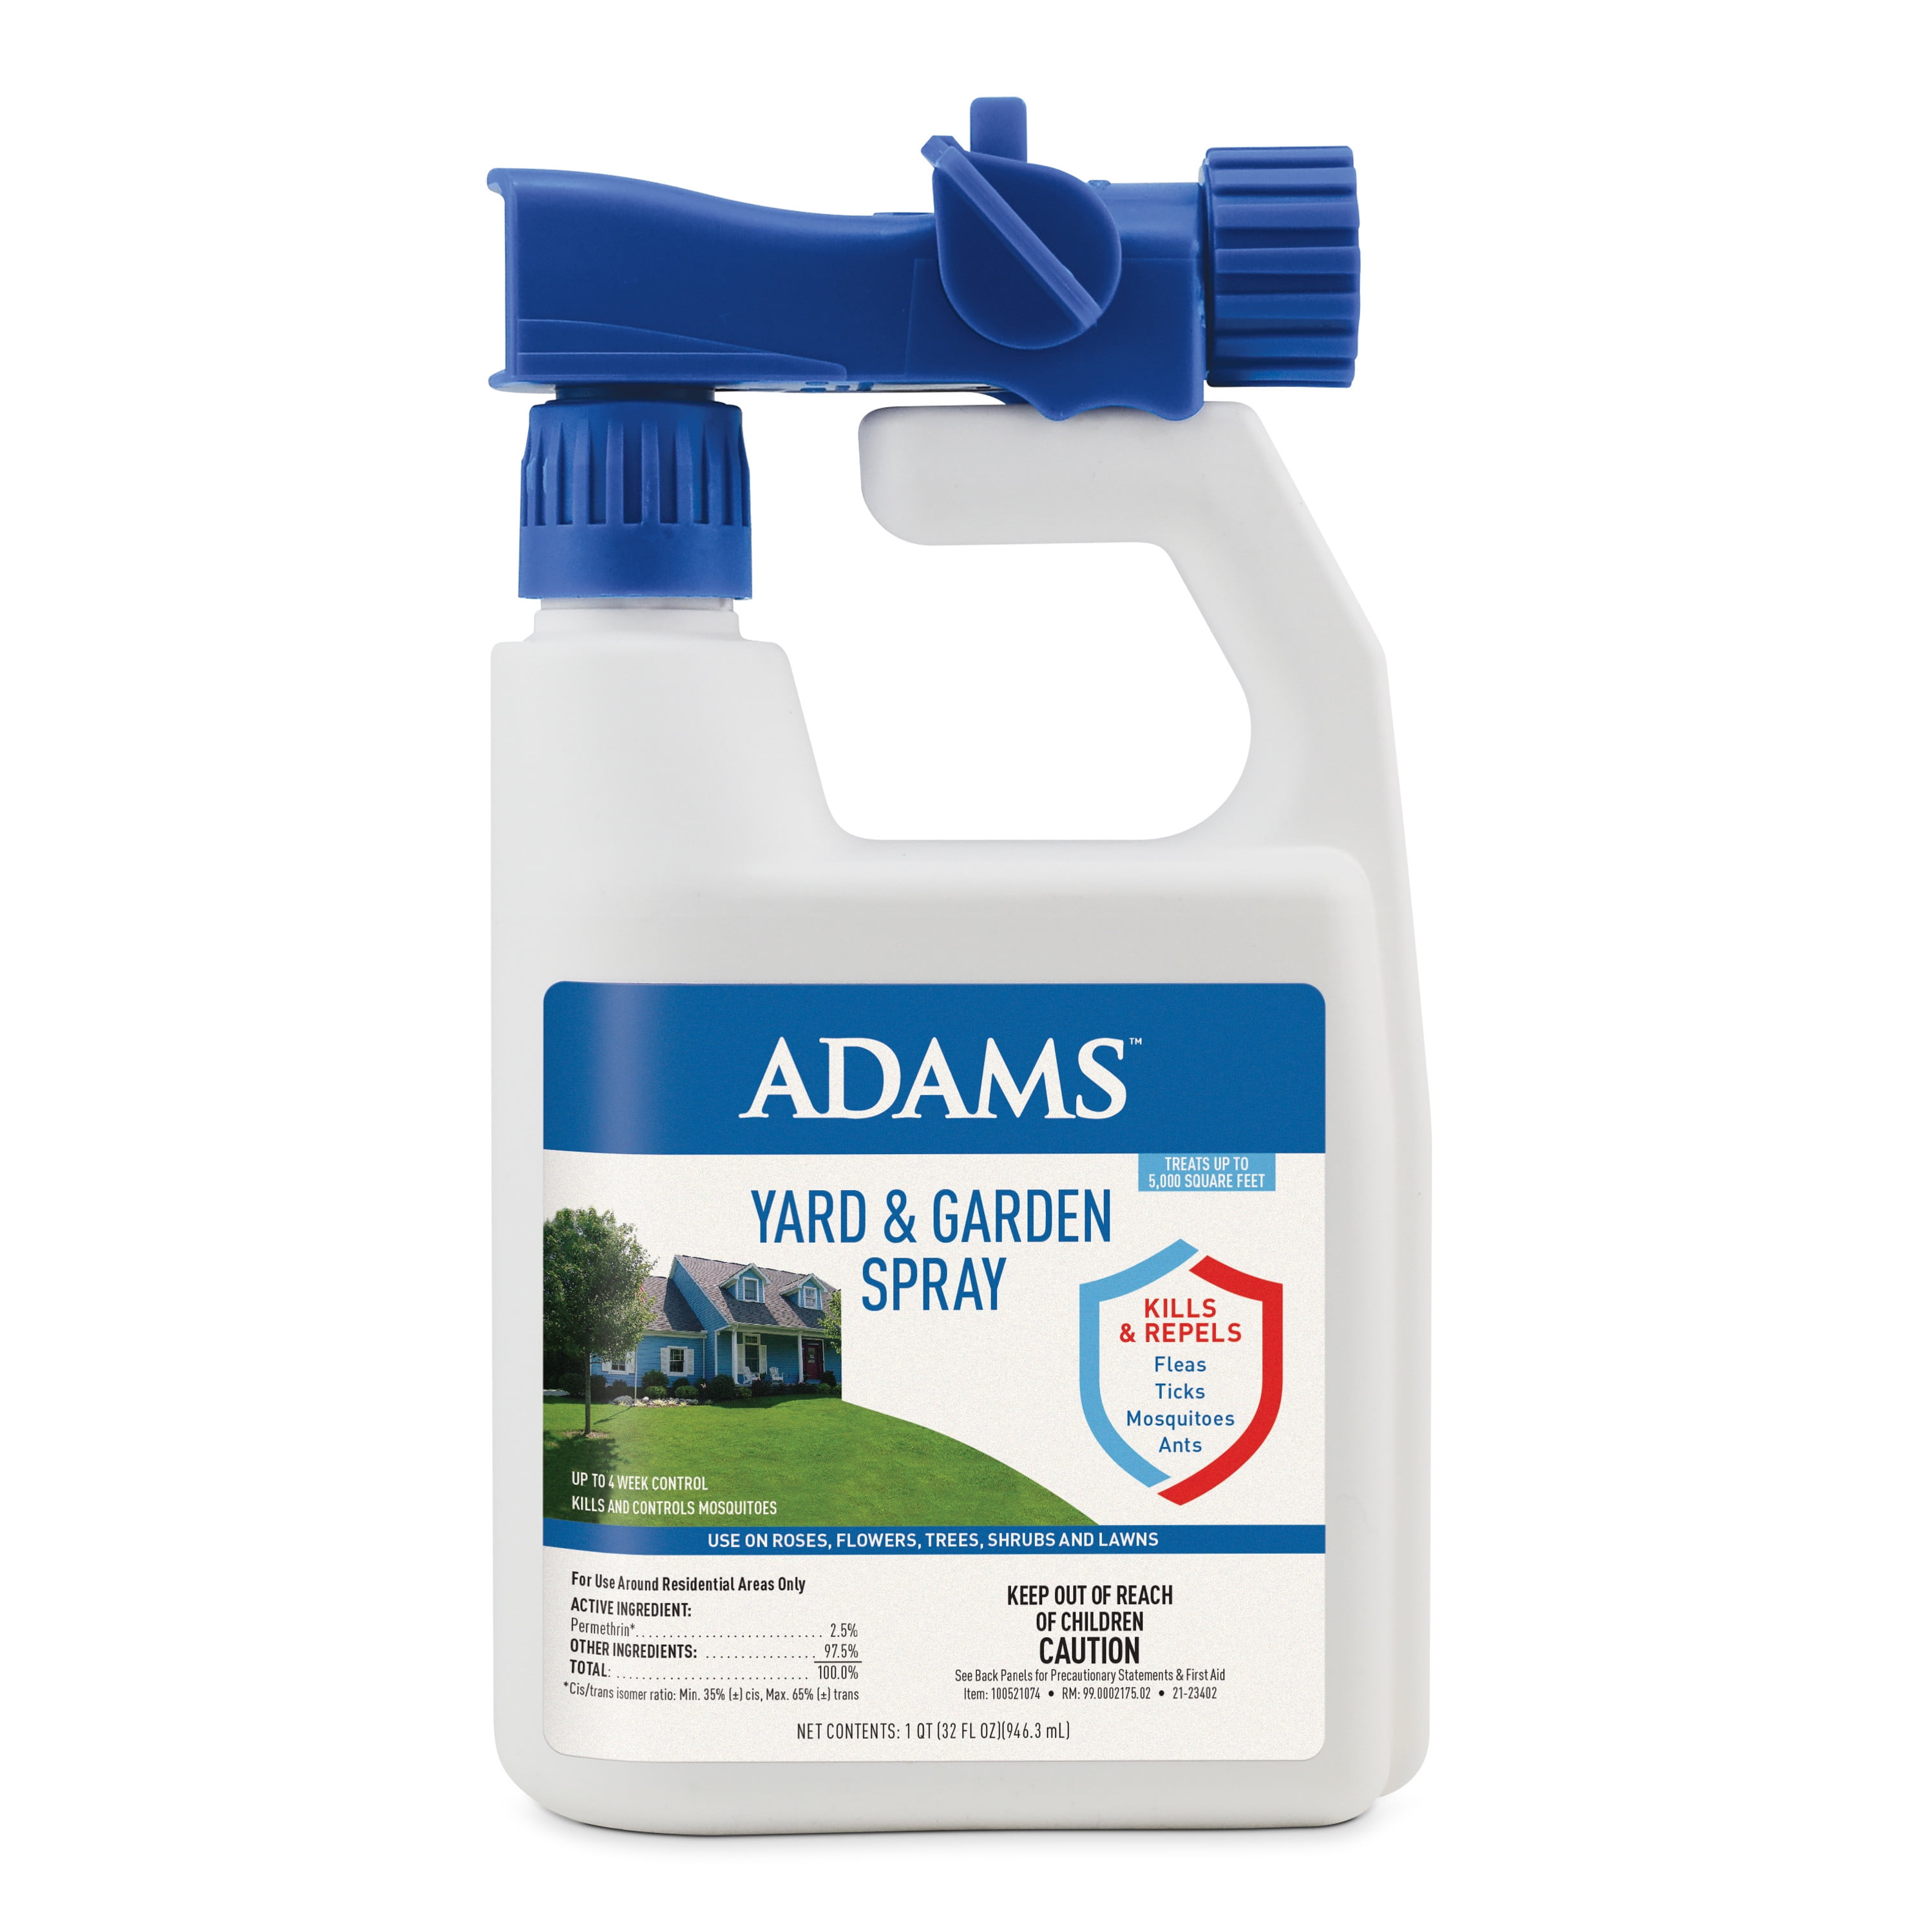 Adams Insect & Pest Repellent Yard & Garden Hose Sprayer Kills Fleas, Ticks, Mosquitoes, 32 fl oz